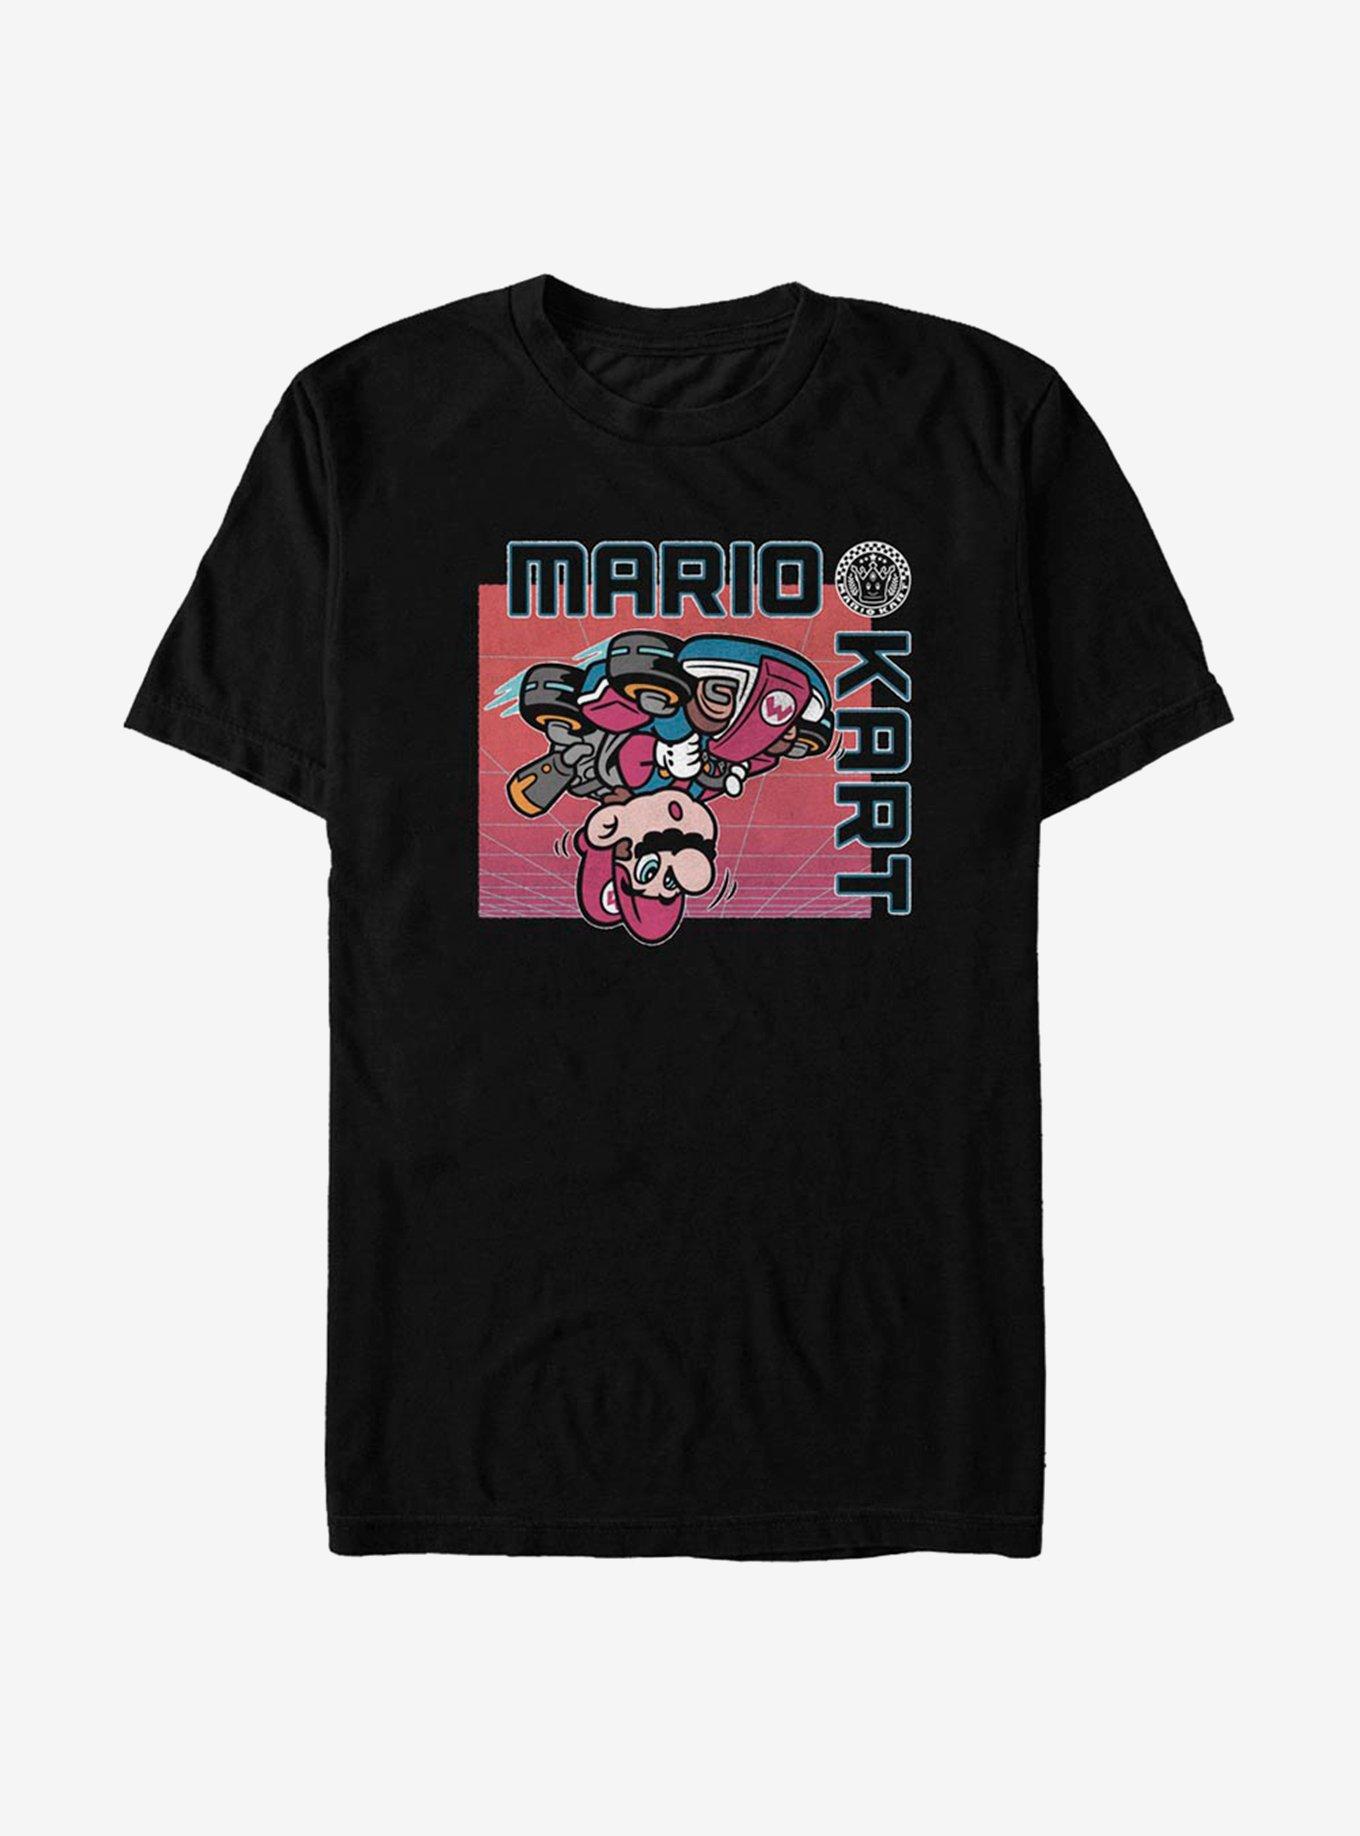 Super Mario Topsy Turvy T-Shirt